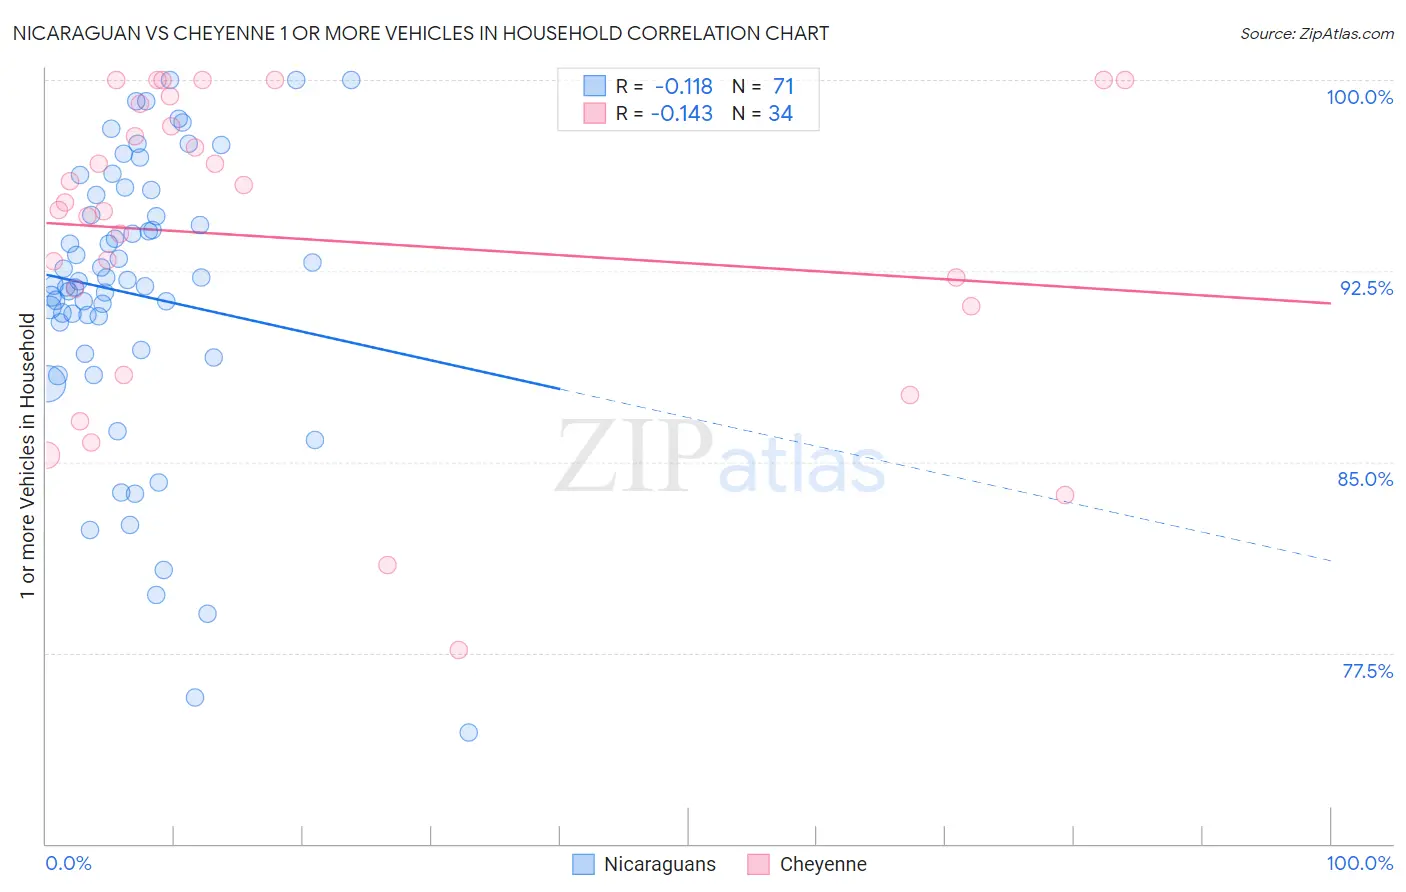 Nicaraguan vs Cheyenne 1 or more Vehicles in Household